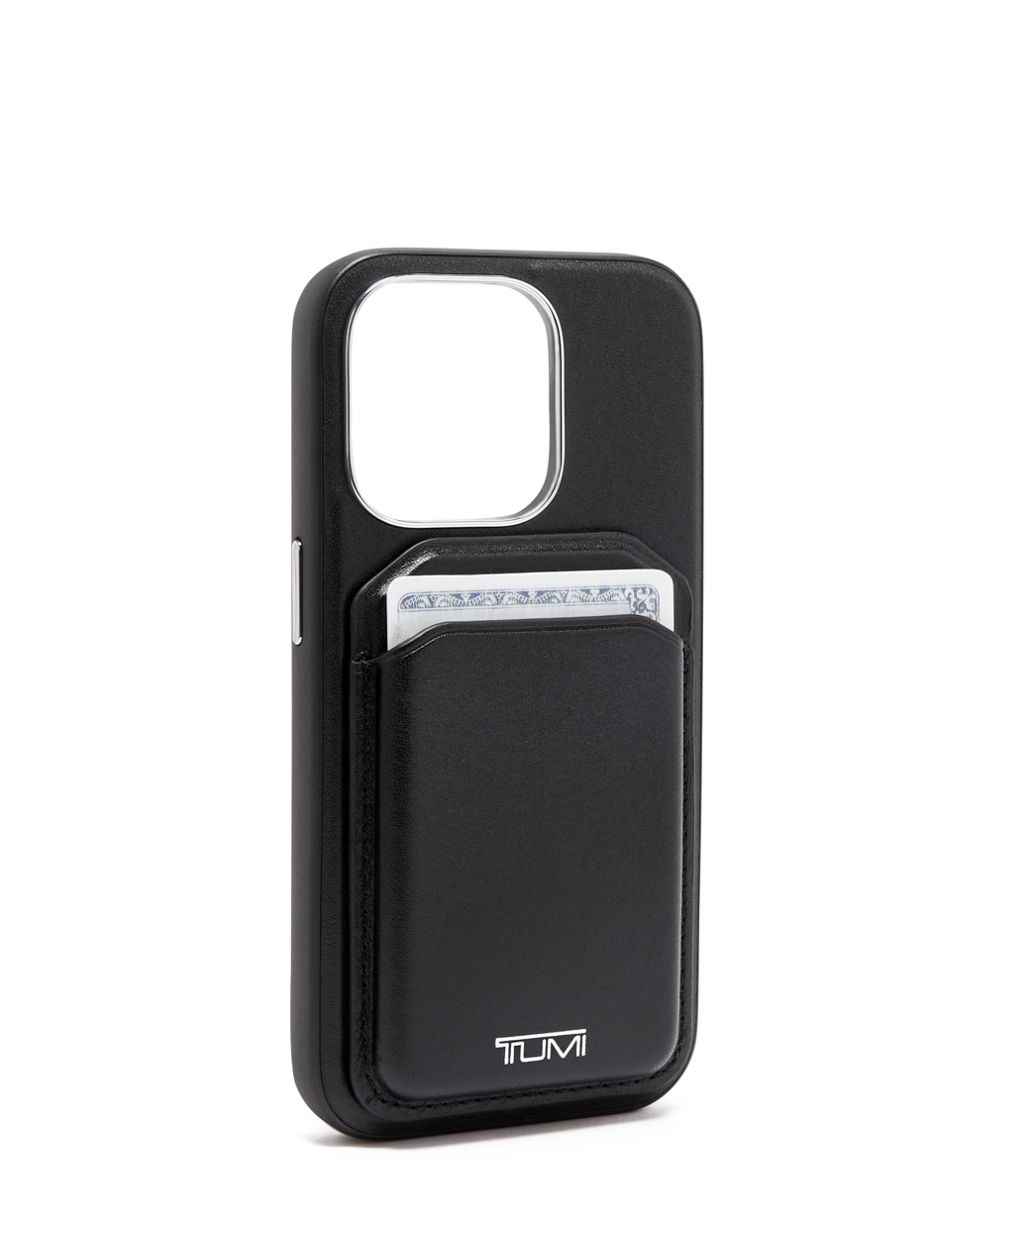 Magnet Wallet Case iPhone 14 Pro